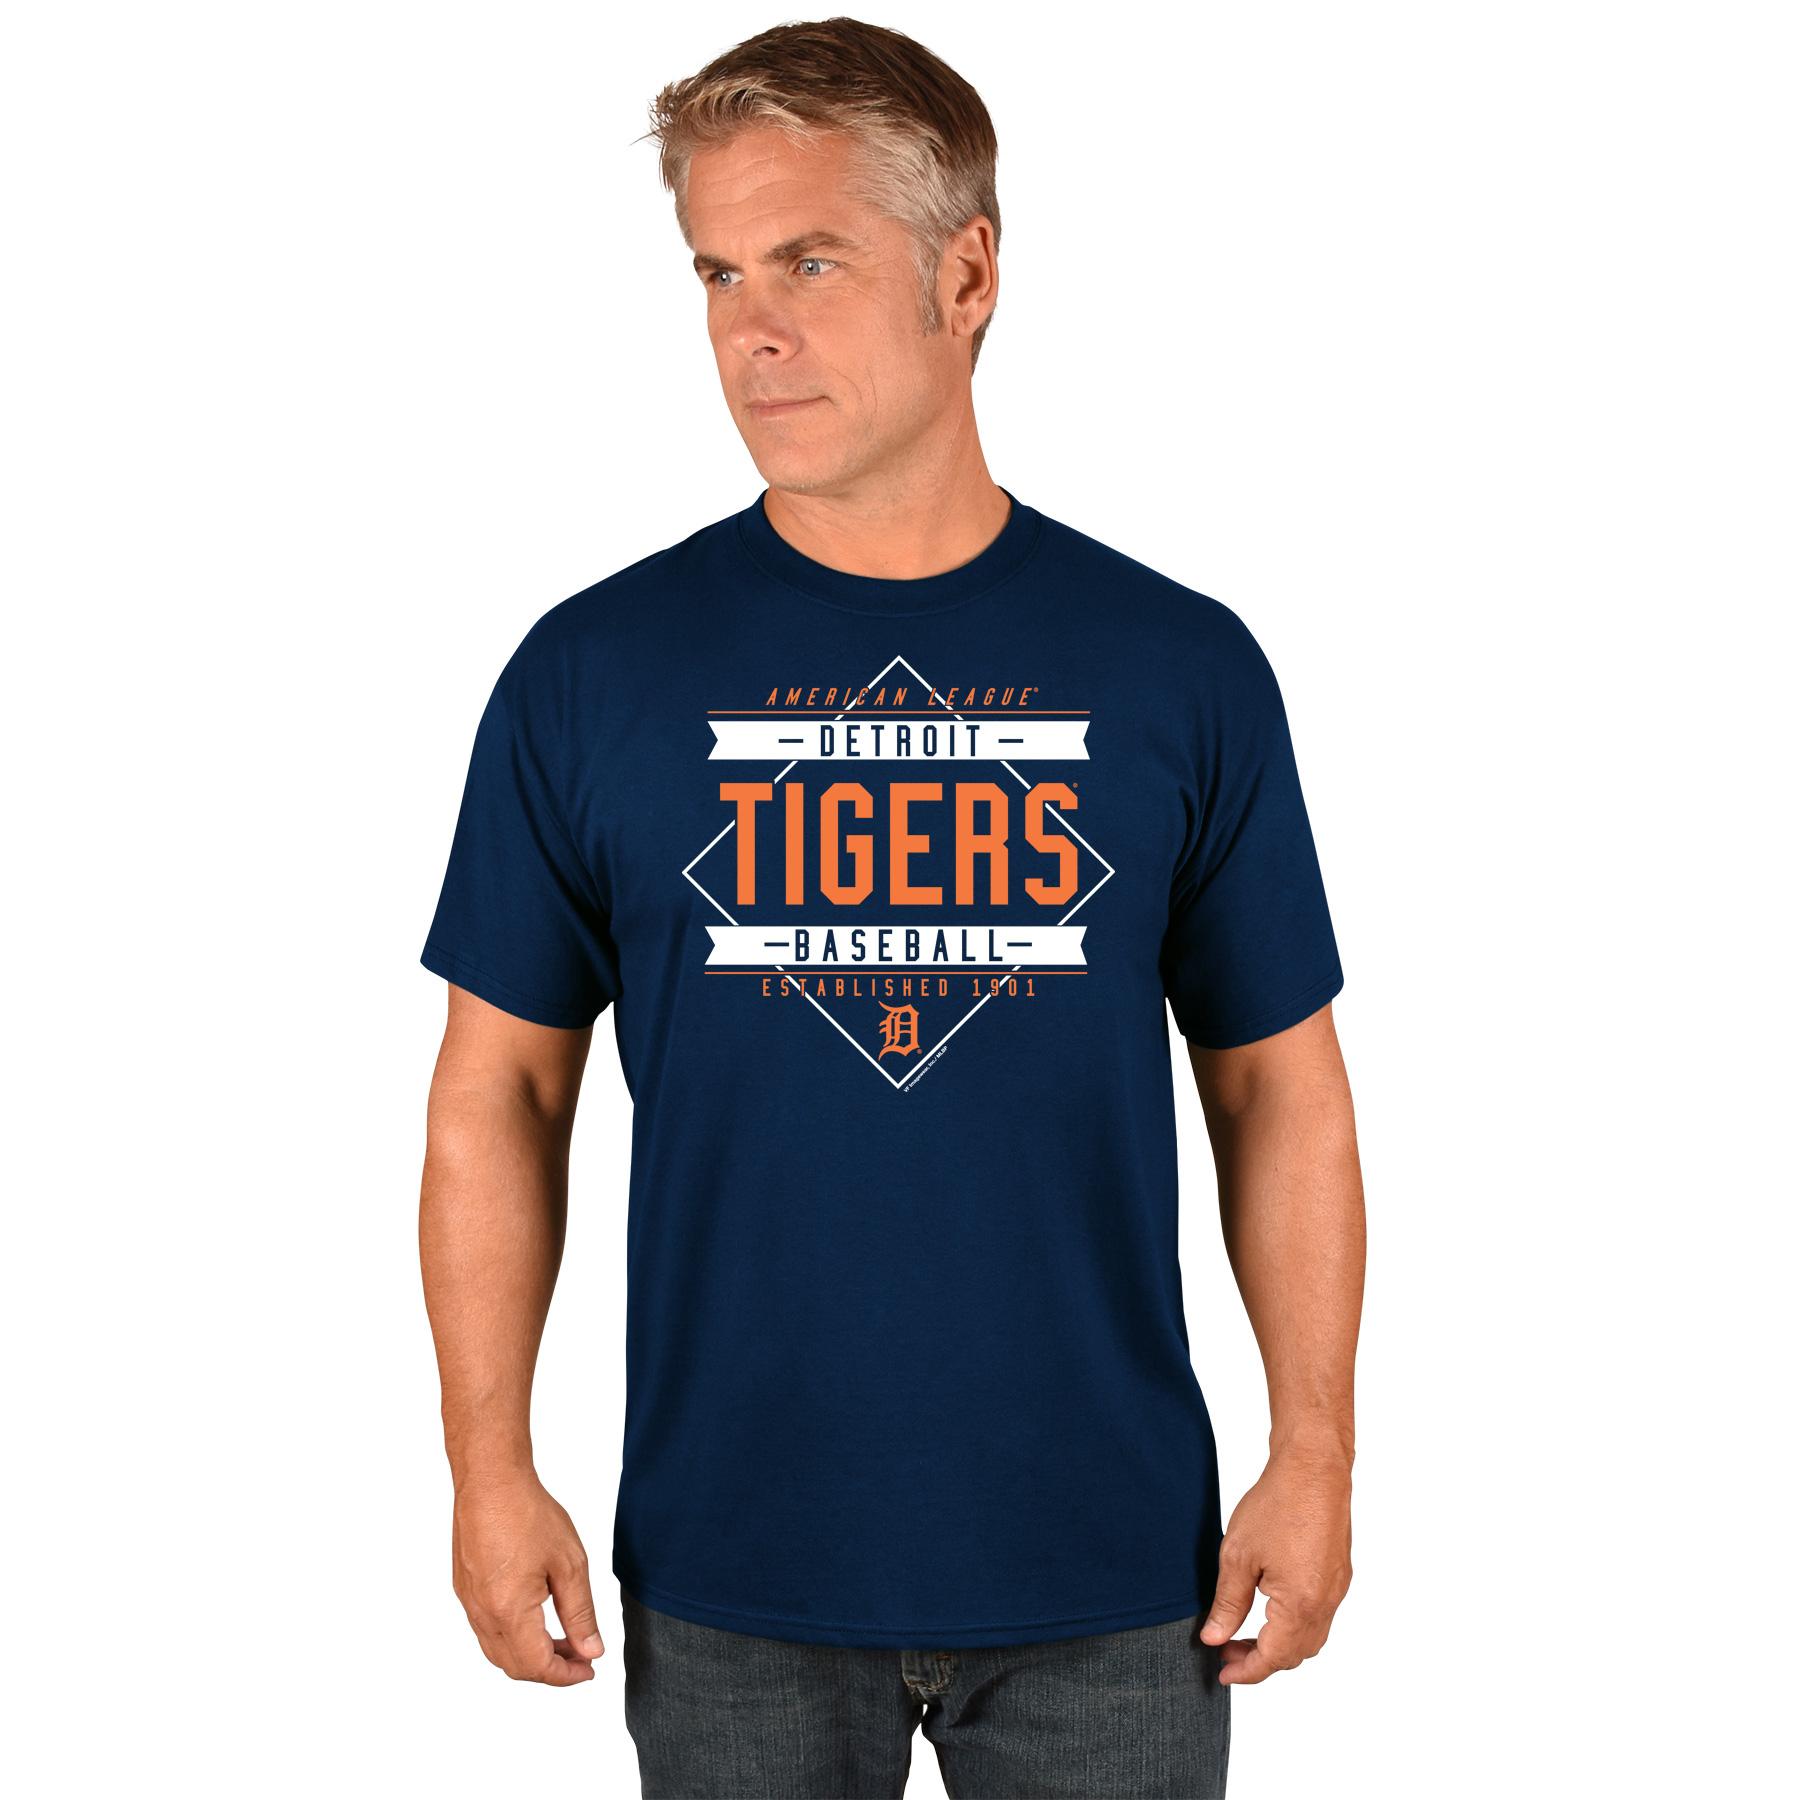 MLB Men's Big & Tall Graphic T-Shirt - Detroit Tigers